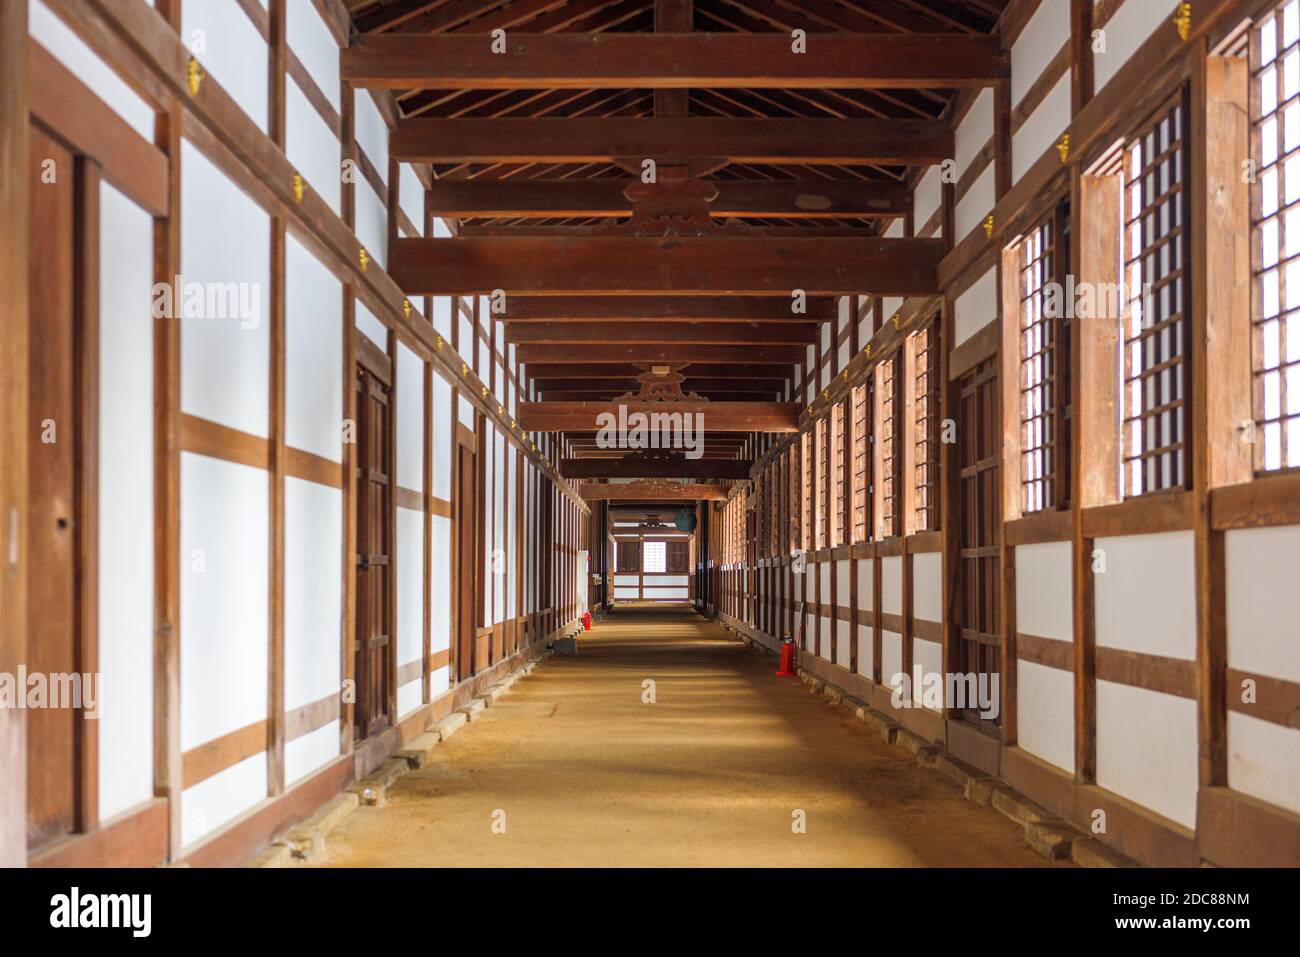 TAKAOKA, JAPAN - JANUARY 30, 2017: An interior hallway of Zuiryuji Temple. The complex dates from 1613. Stock Photo